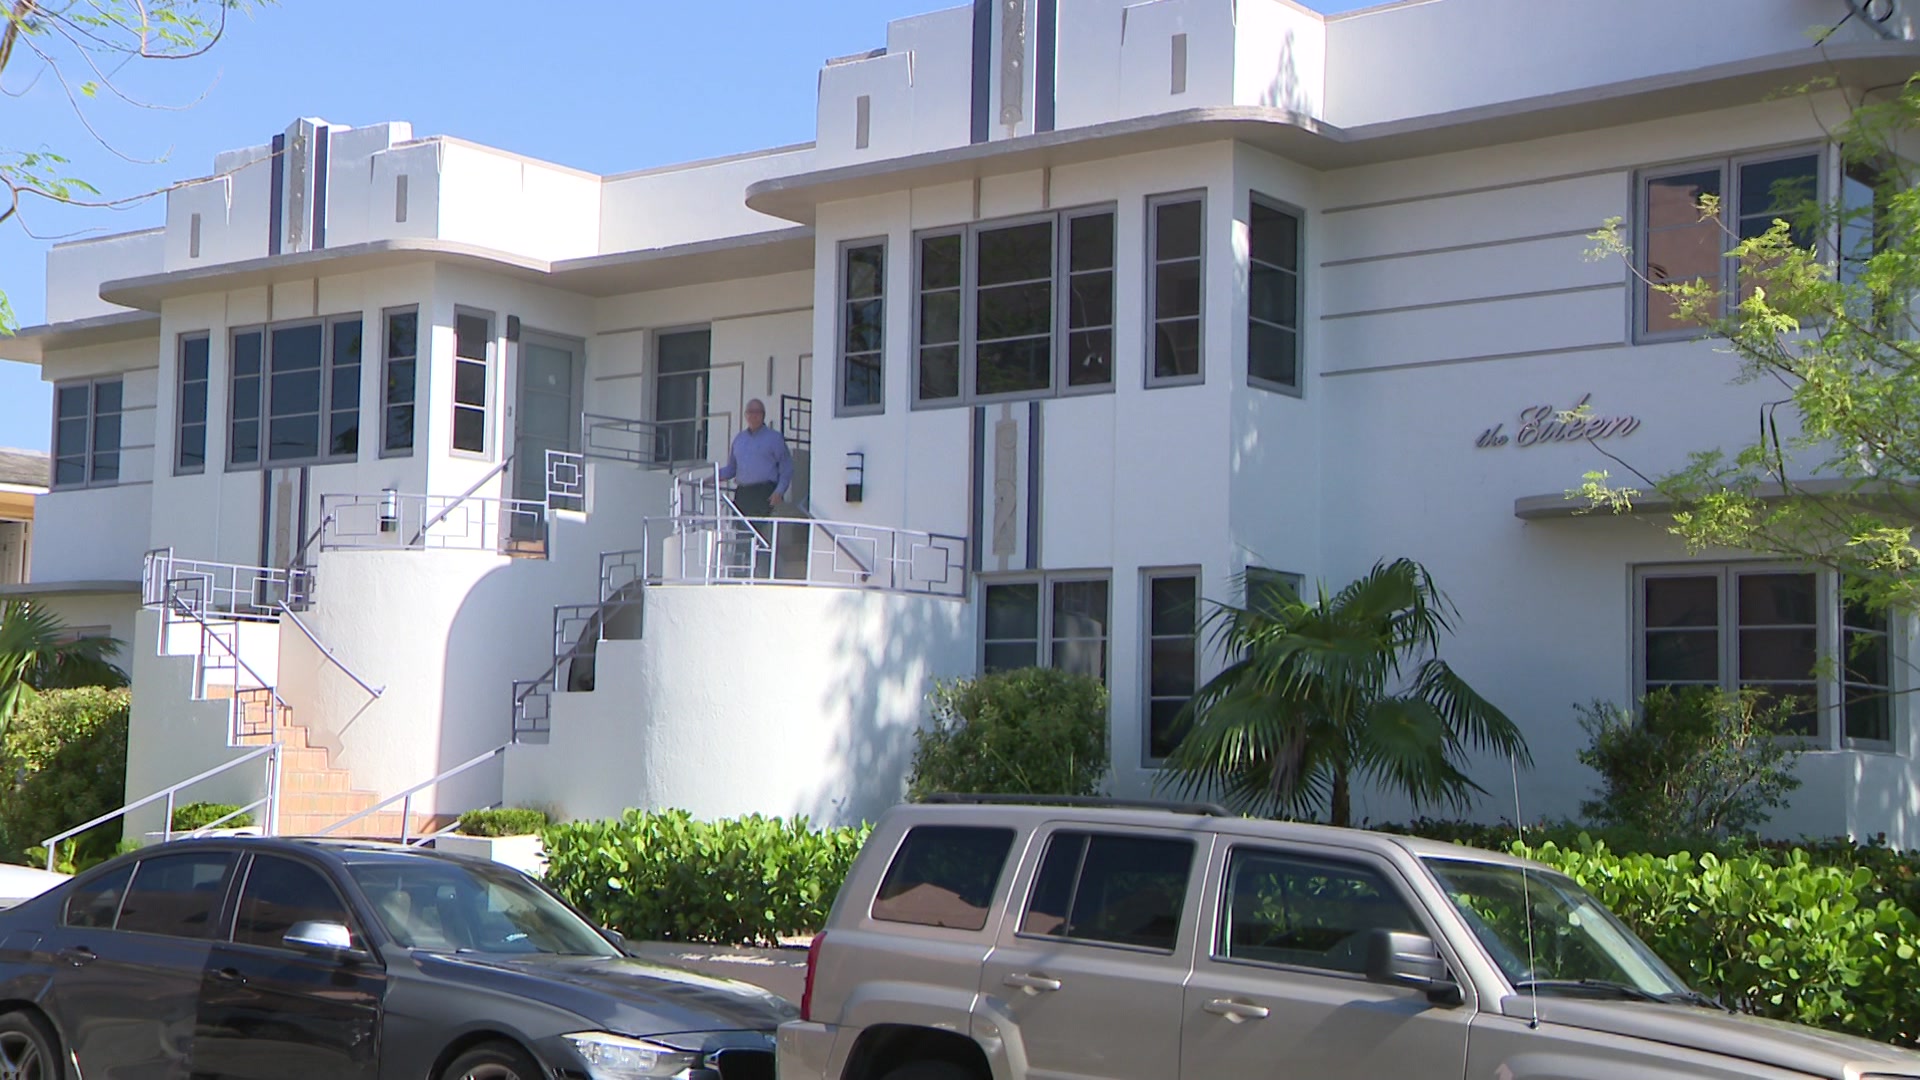 Affordable Housing Art Deco Style In Little Havana